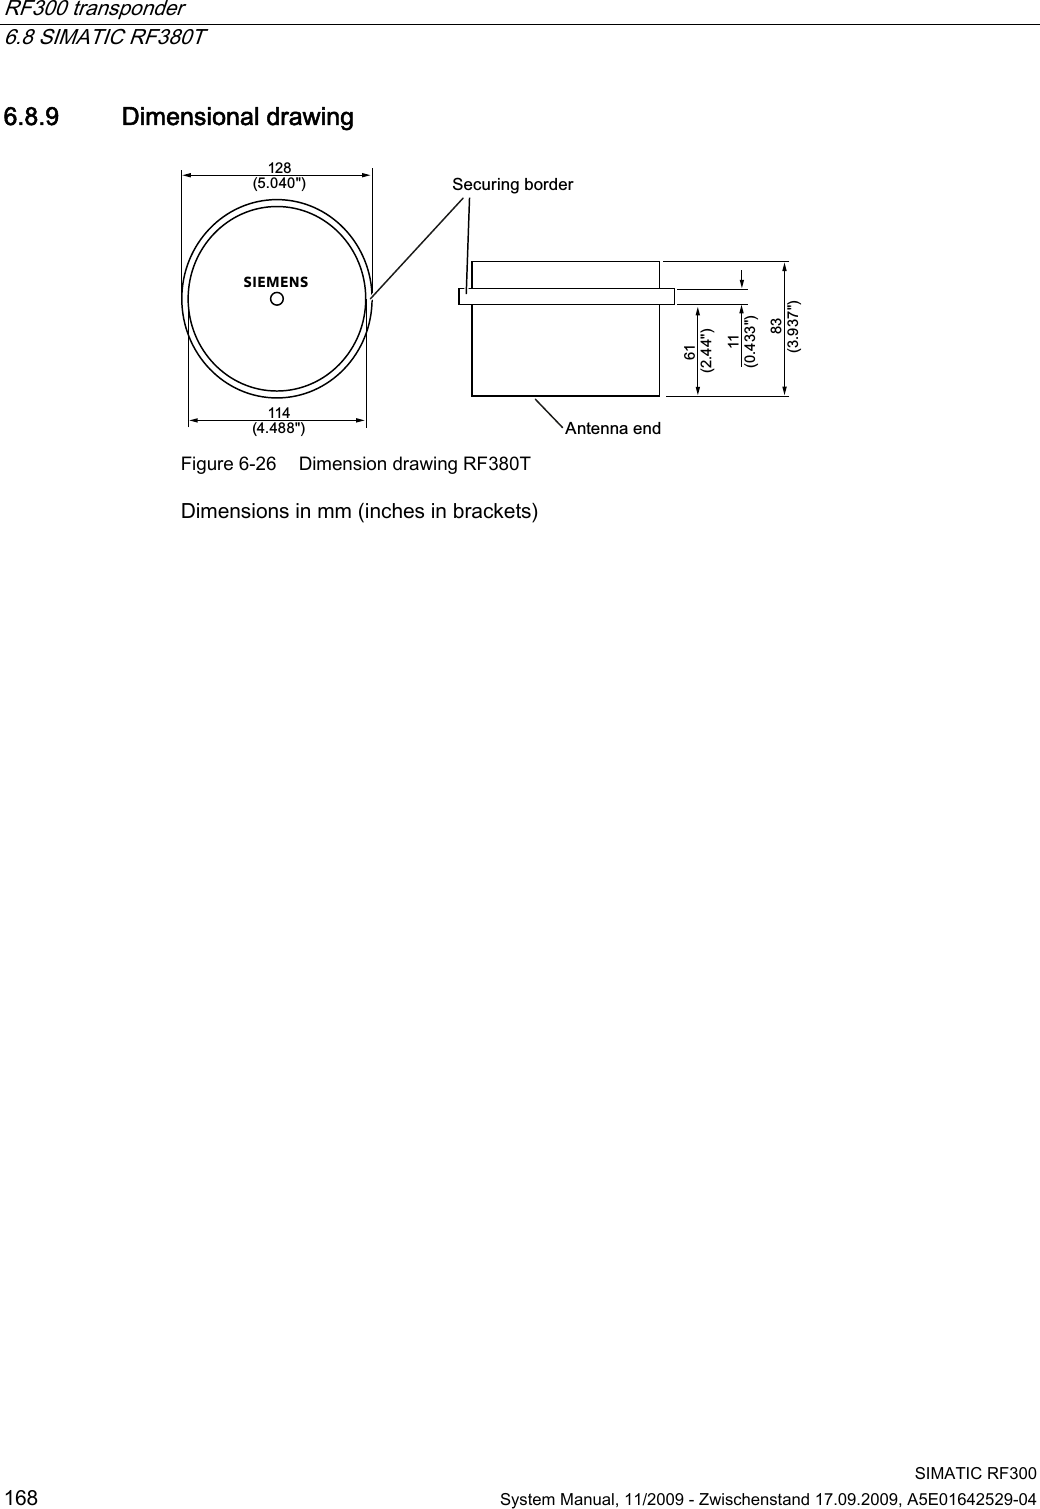 RF300 transponder   6.8 SIMATIC RF380T  SIMATIC RF300 168  System Manual, 11/2009 - Zwischenstand 17.09.2009, A5E01642529-04 6.8.9 Dimensional drawing SIEMENS6HFXULQJERUGHU$QWHQQDHQG Figure 6-26  Dimension drawing RF380T Dimensions in mm (inches in brackets) 